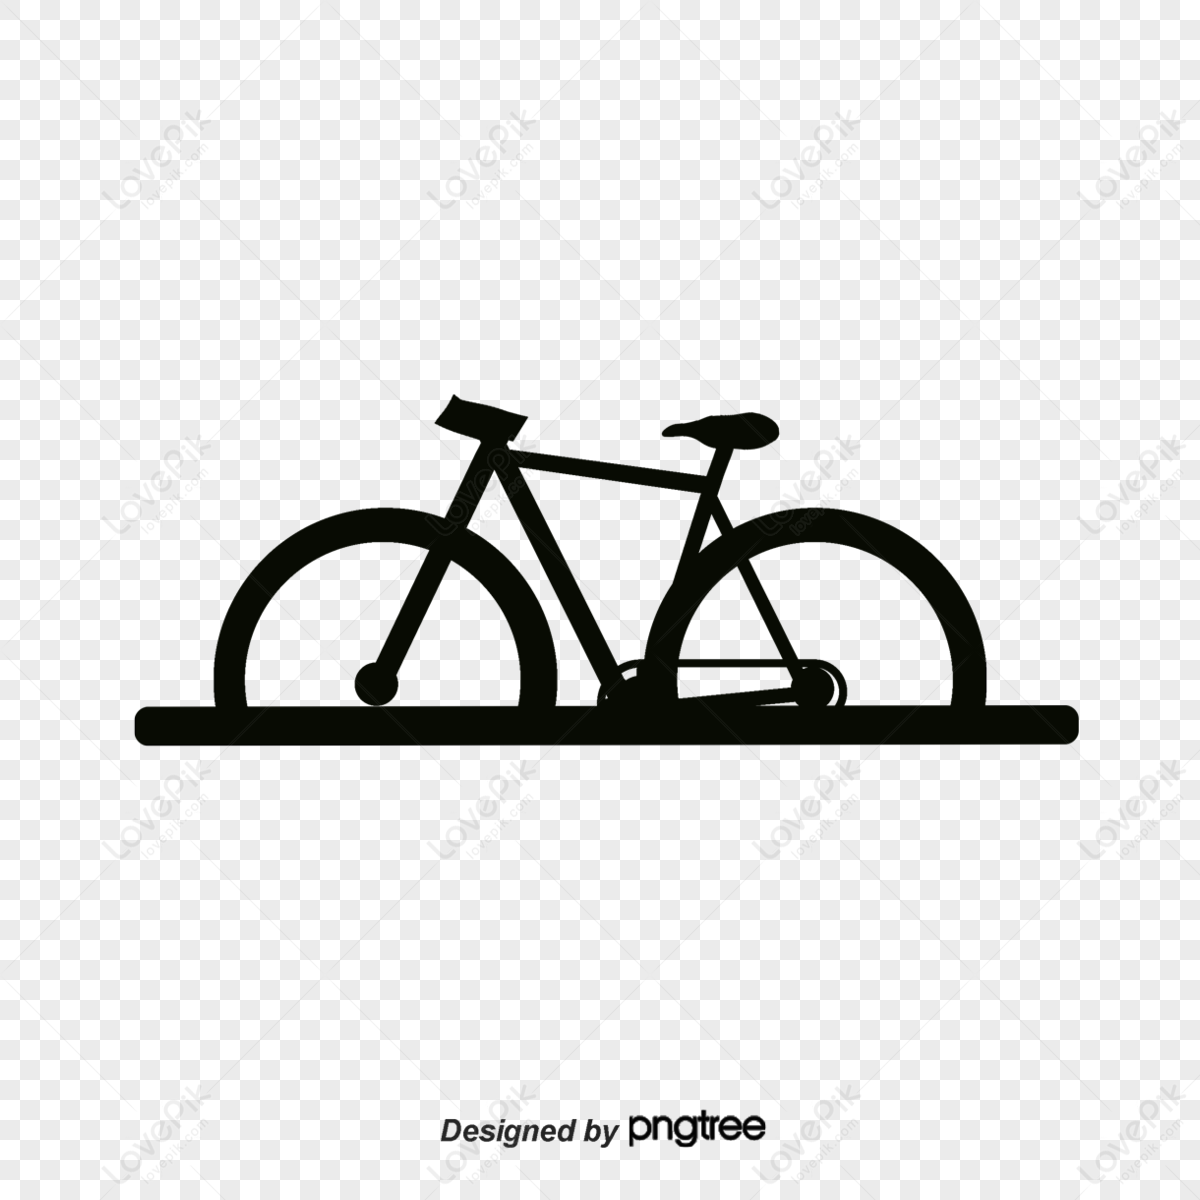 Premium Vector | Bicycle race logo vector icon illustration